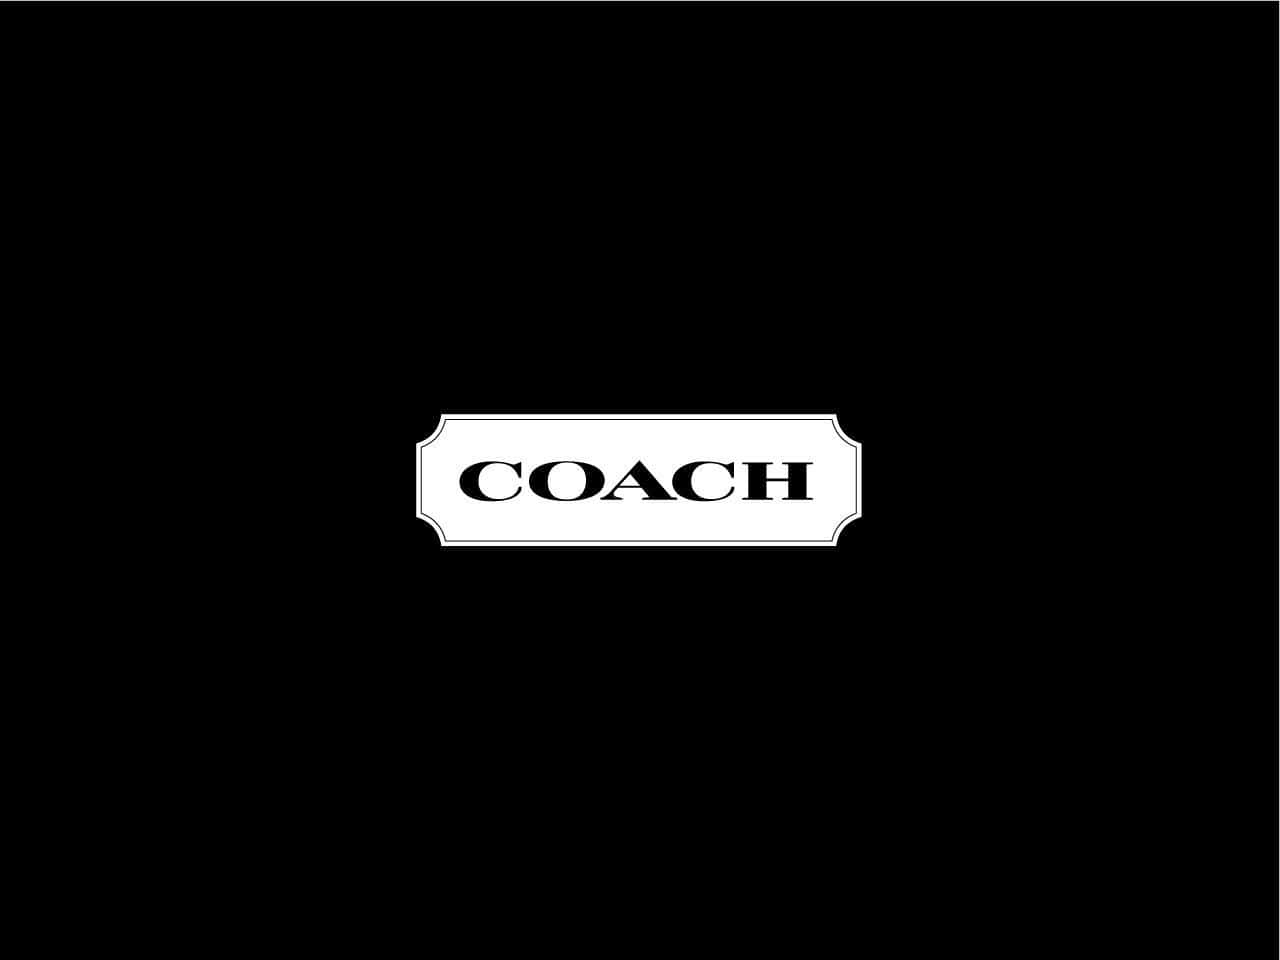 Download Coach Logo Wallpaper 